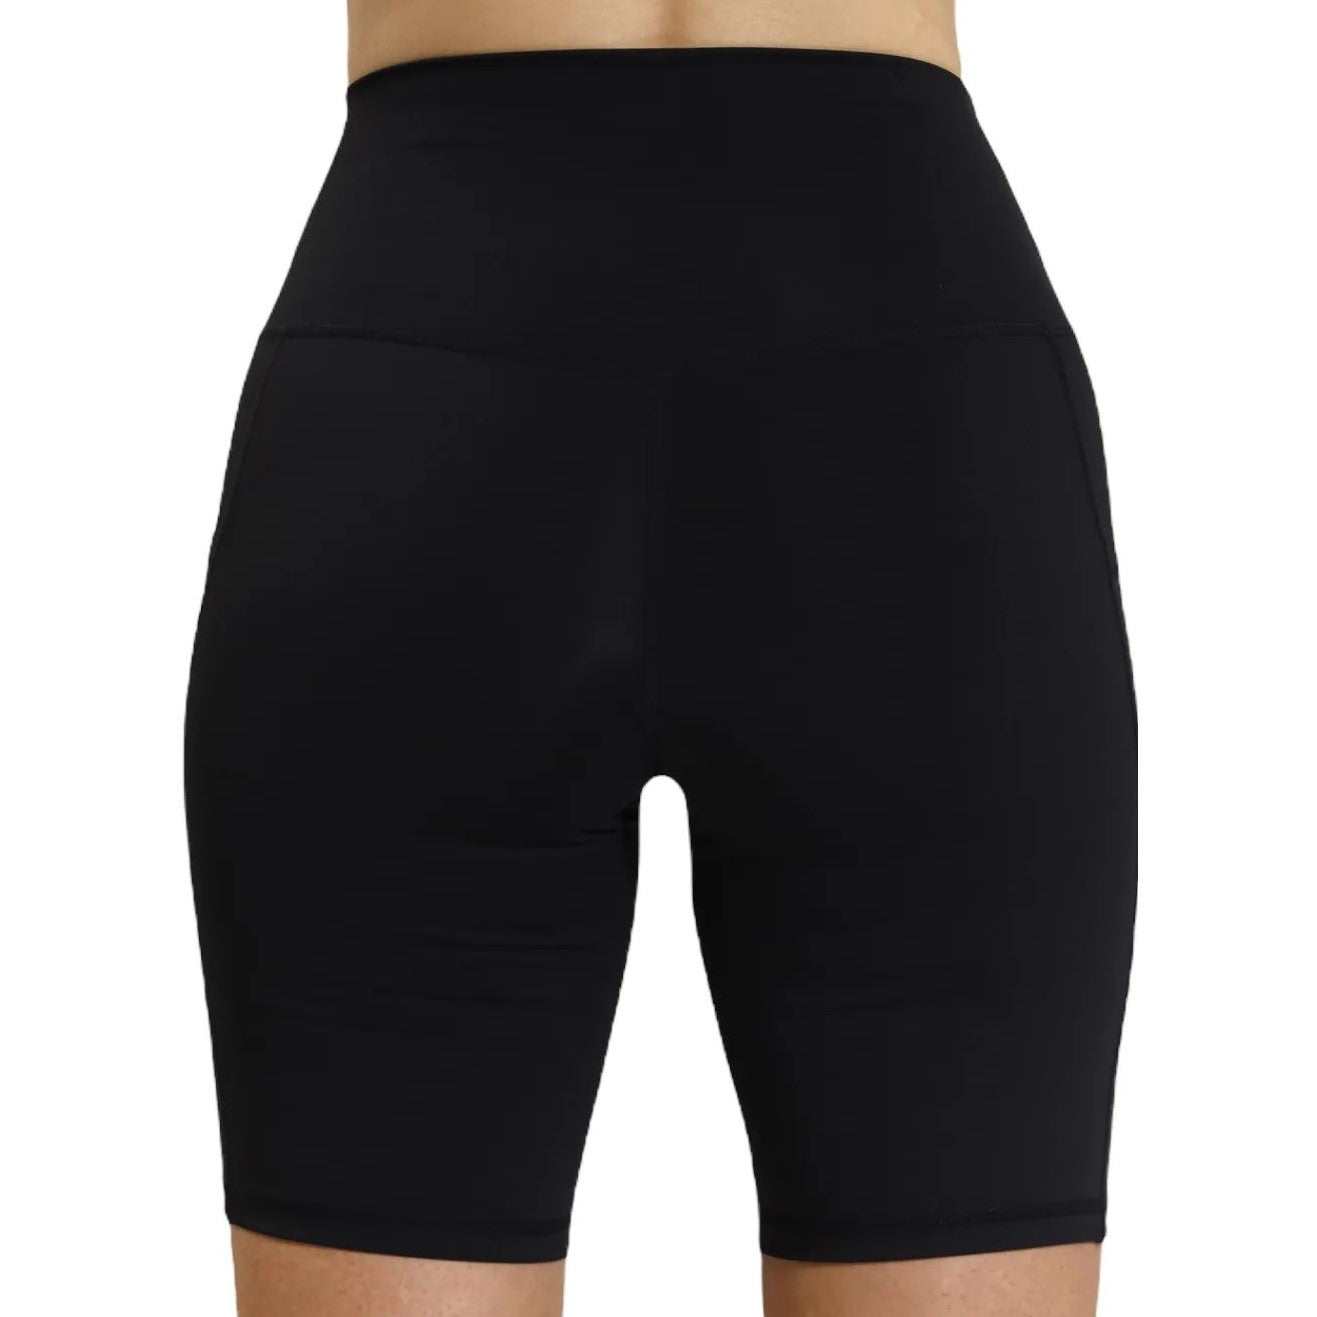 Black cycling shorts